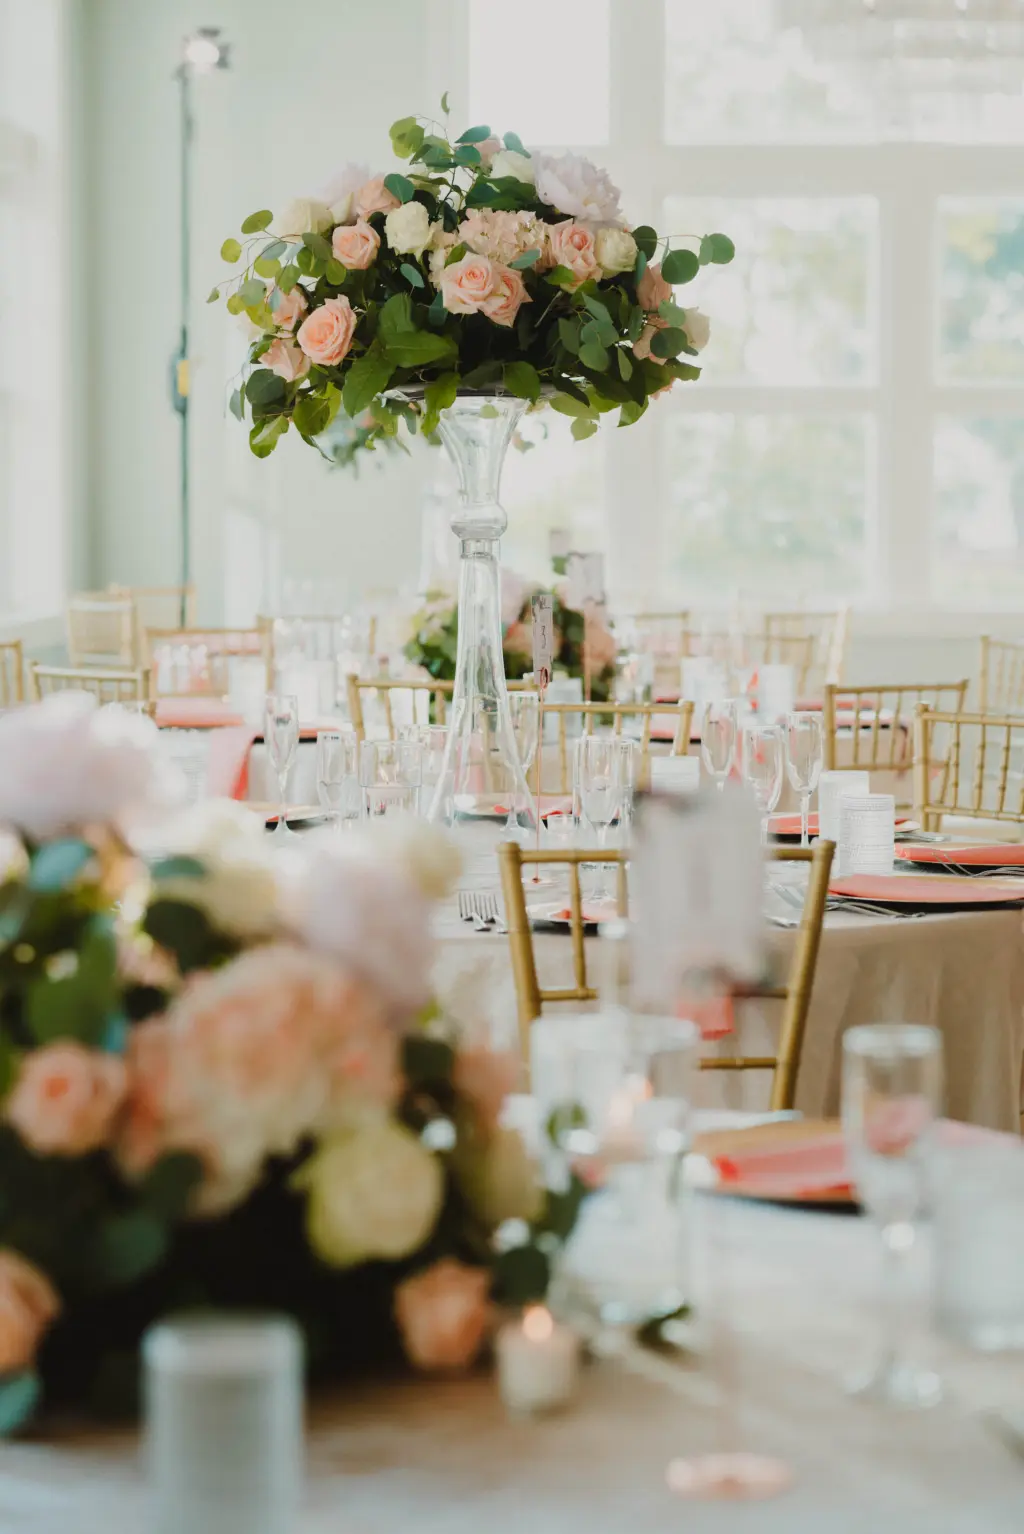 Greenery, Blush Pink and White Rose Wedding Reception Centerpiece Ideas